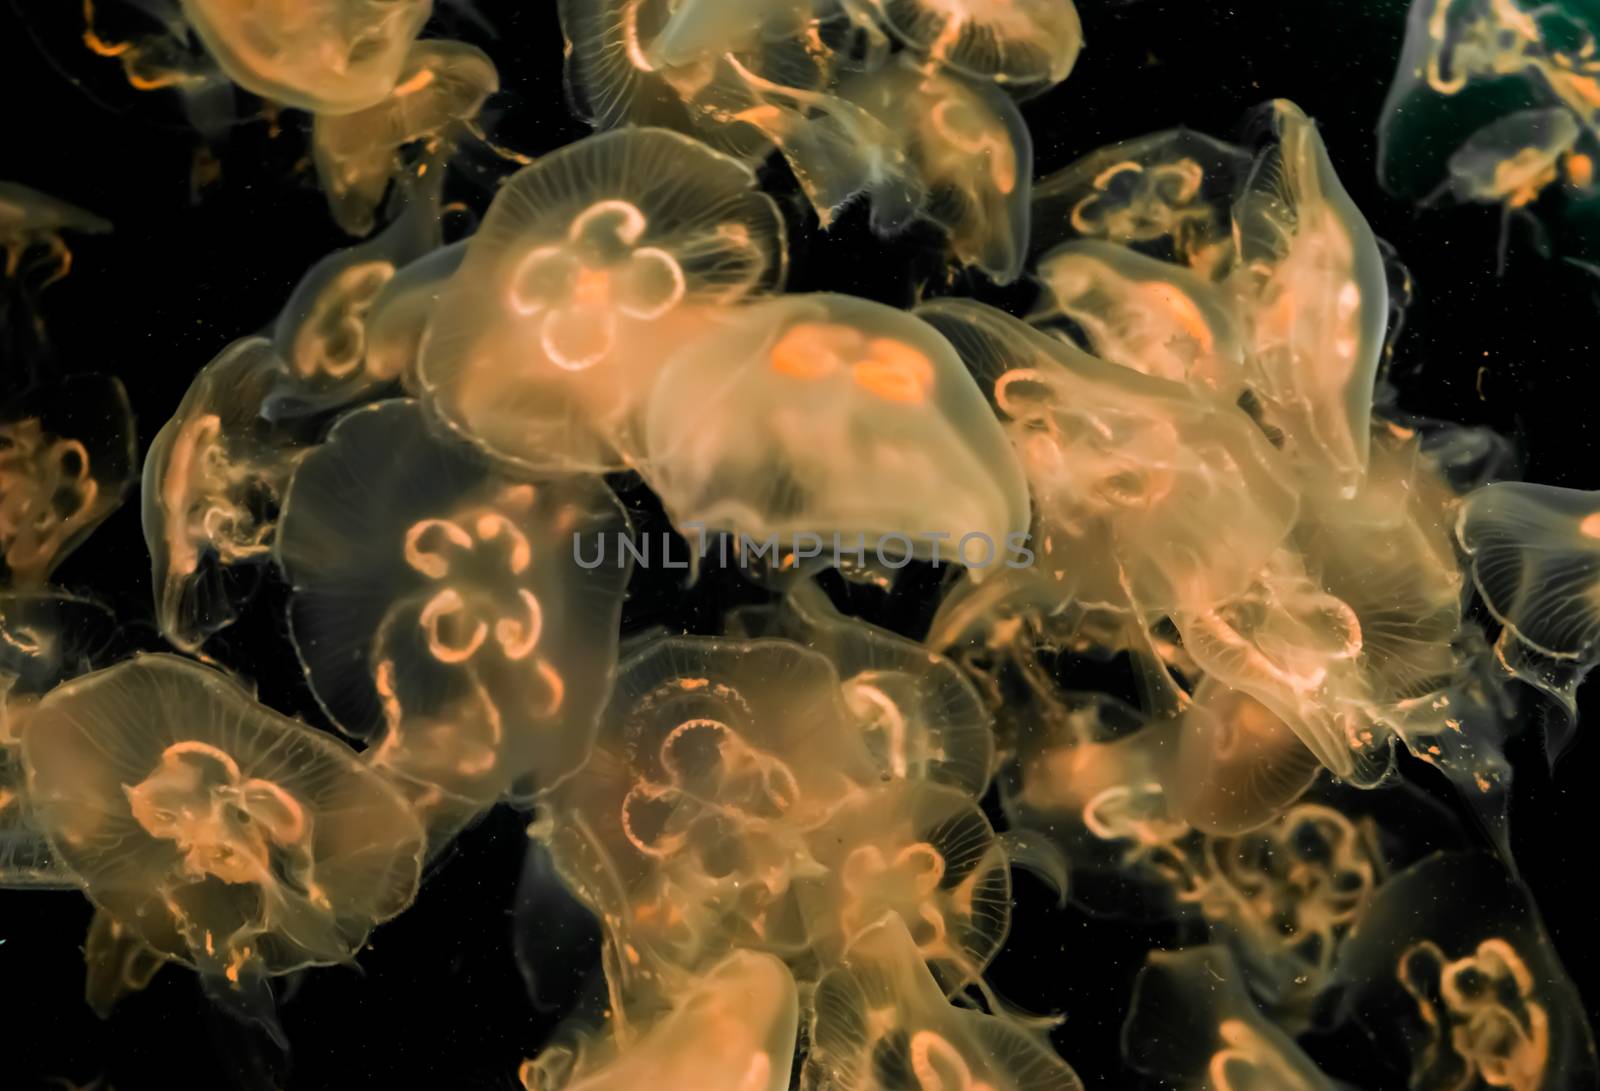 beautiful marine life background of many moon jellyfish lighting up and glowing in the dark ocean by charlottebleijenberg